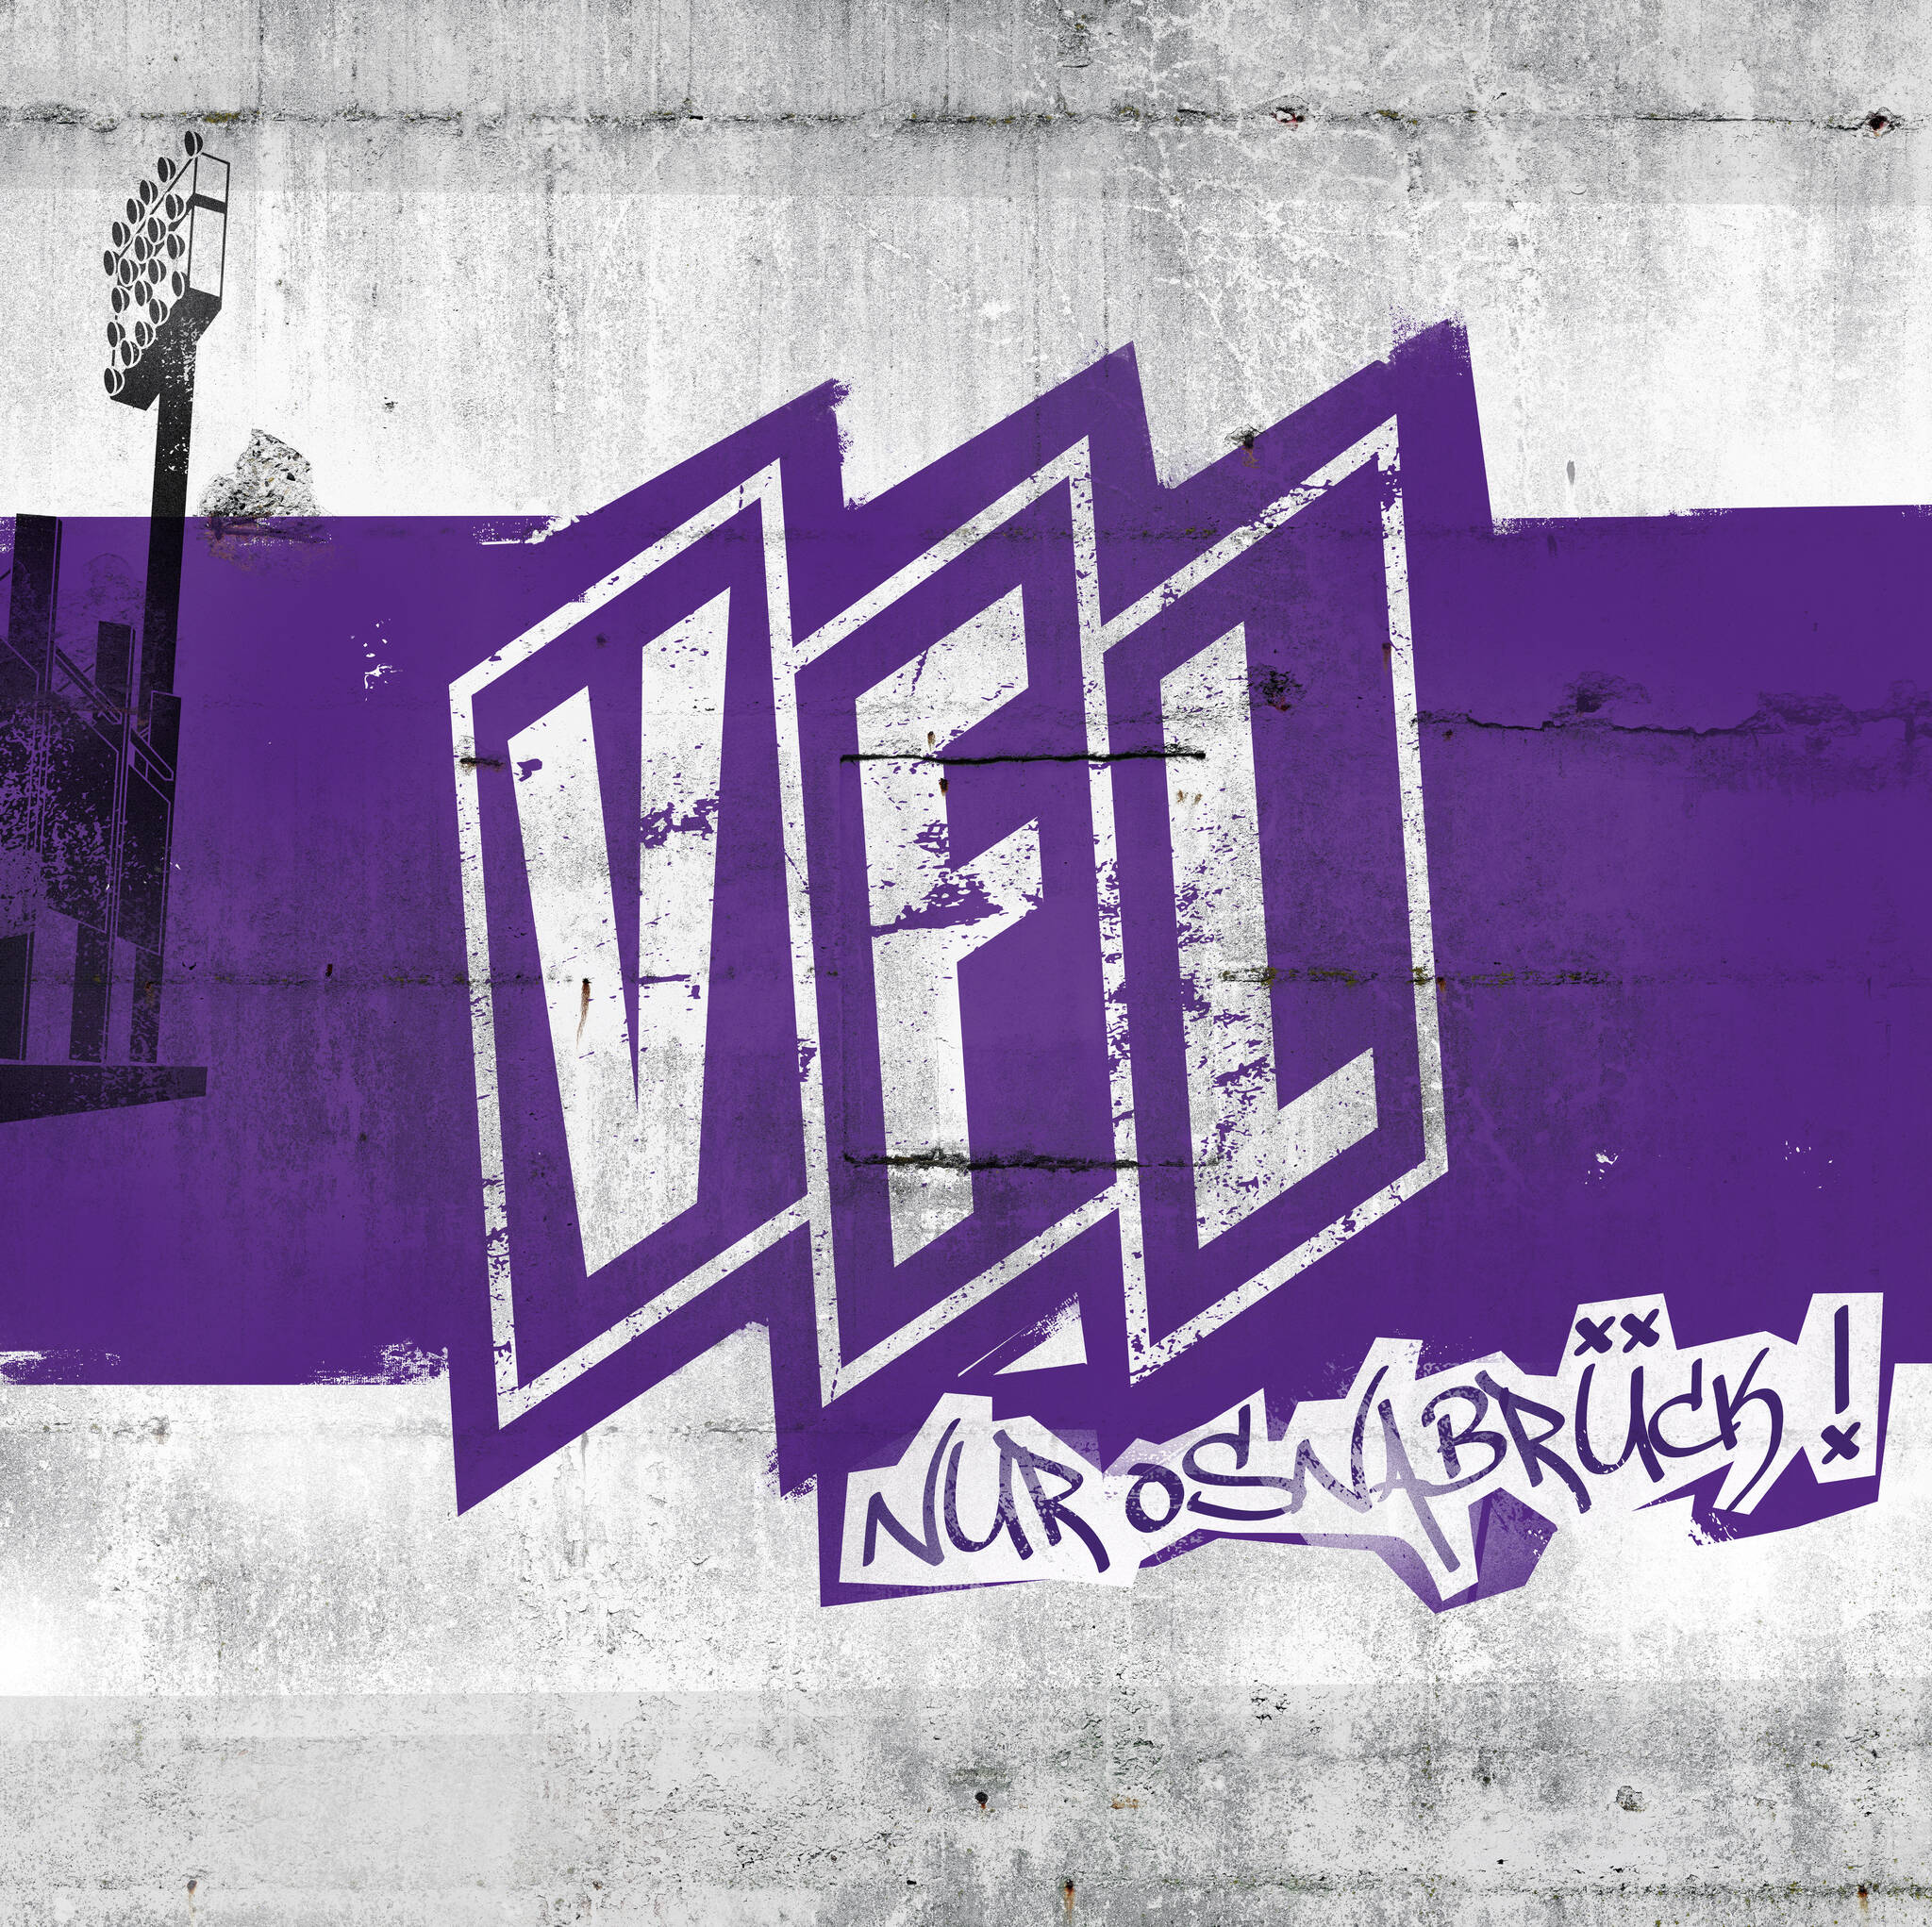 Fototapete mit Vfl Osnabrück Logo und Graffiti